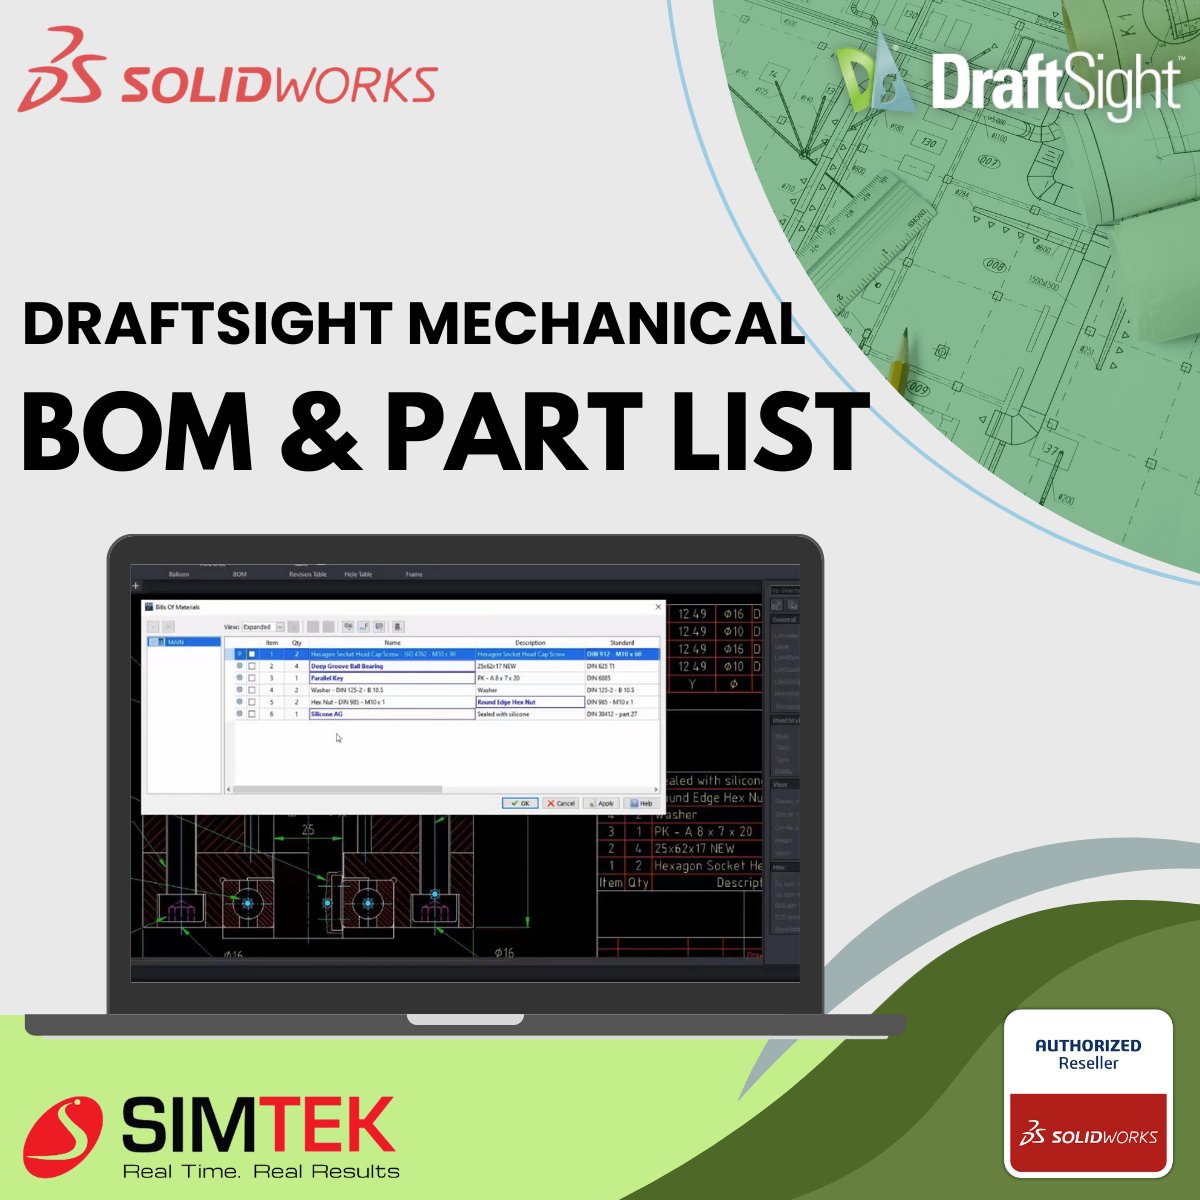 🛠DRAFTSIGHT MECHANICAL BOM & Part List🔧📊

📌 Reach our team to upgrade DraftSight  2024 
🌐 simtek.in
📧 marketing@simtek.in
☎ +91 8754447021

#SIMTEK #ENGINEERINGDESIGN #DraftSight #MechanicalDesign #BOM #PartList #CAD #Innovation #2dCAD #2DDESIGN